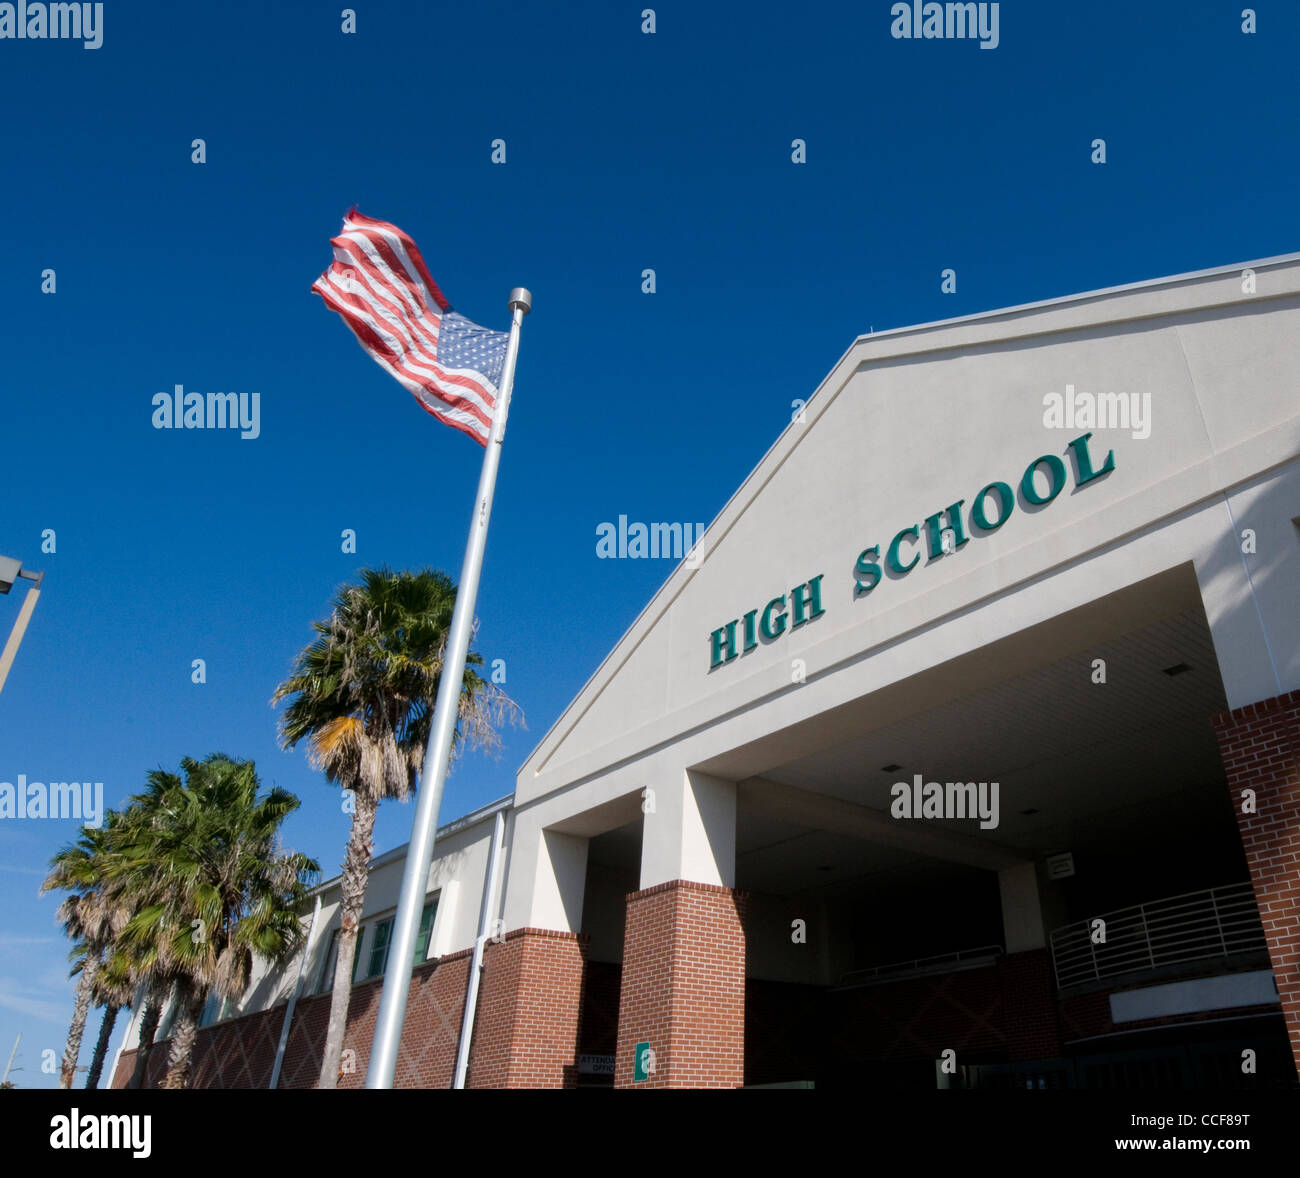 High School in Melbourne, Florida Stock Photo